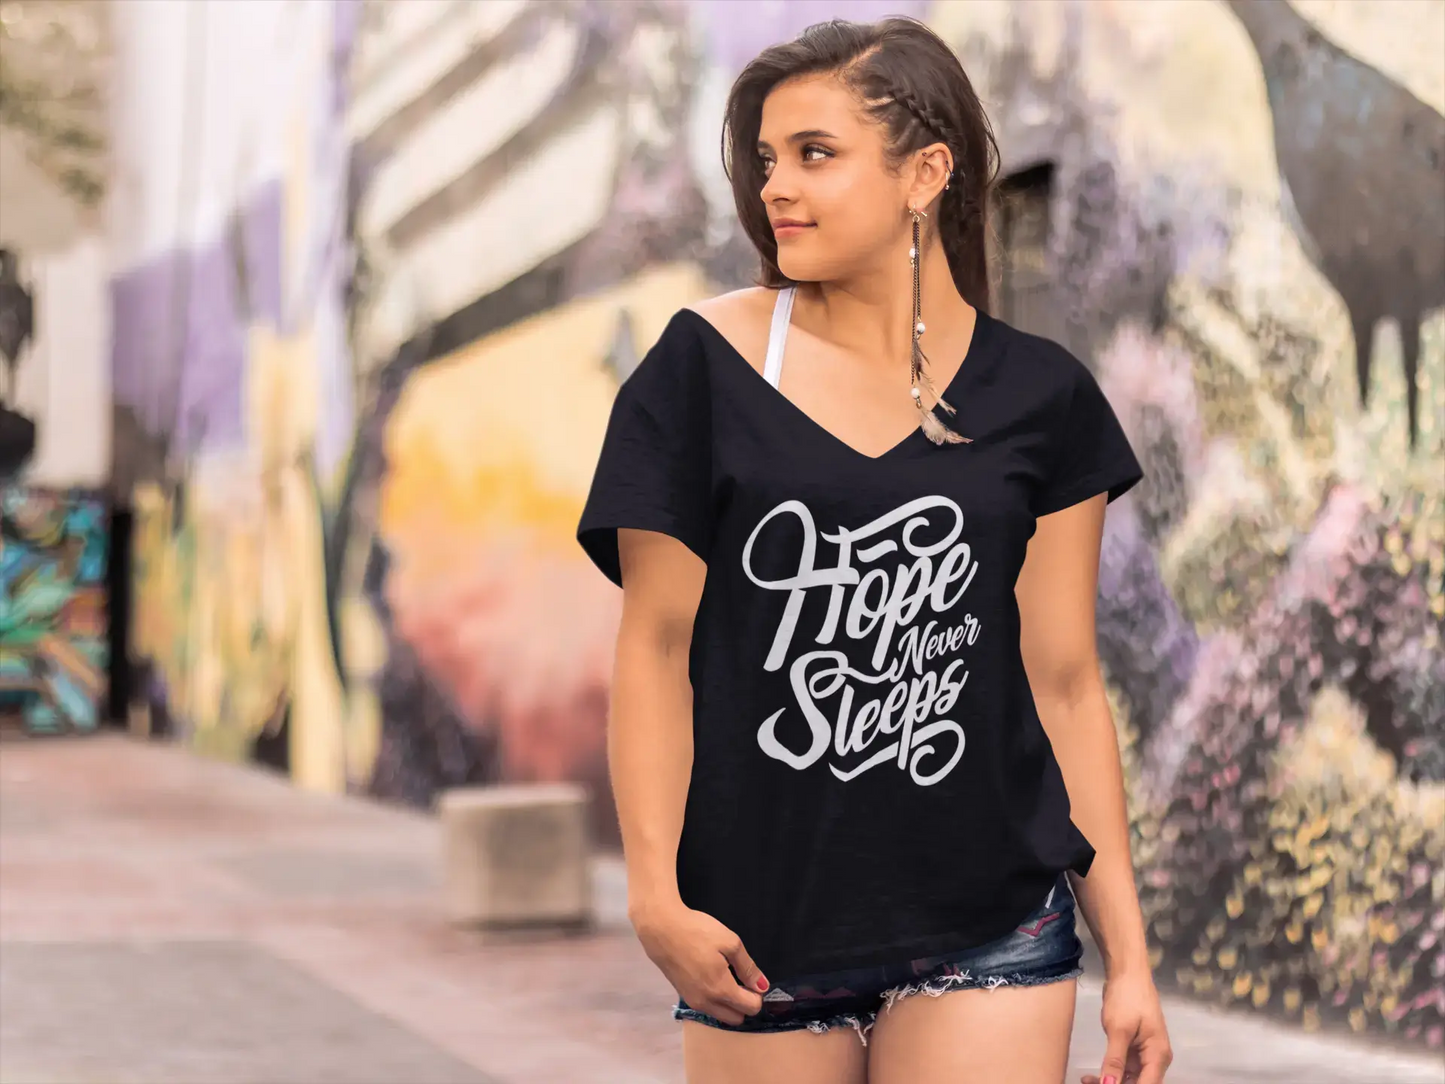 ULTRABASIC Women's T-Shirt Hope Never Sleeps - Motivational Slogan Graphic Tee